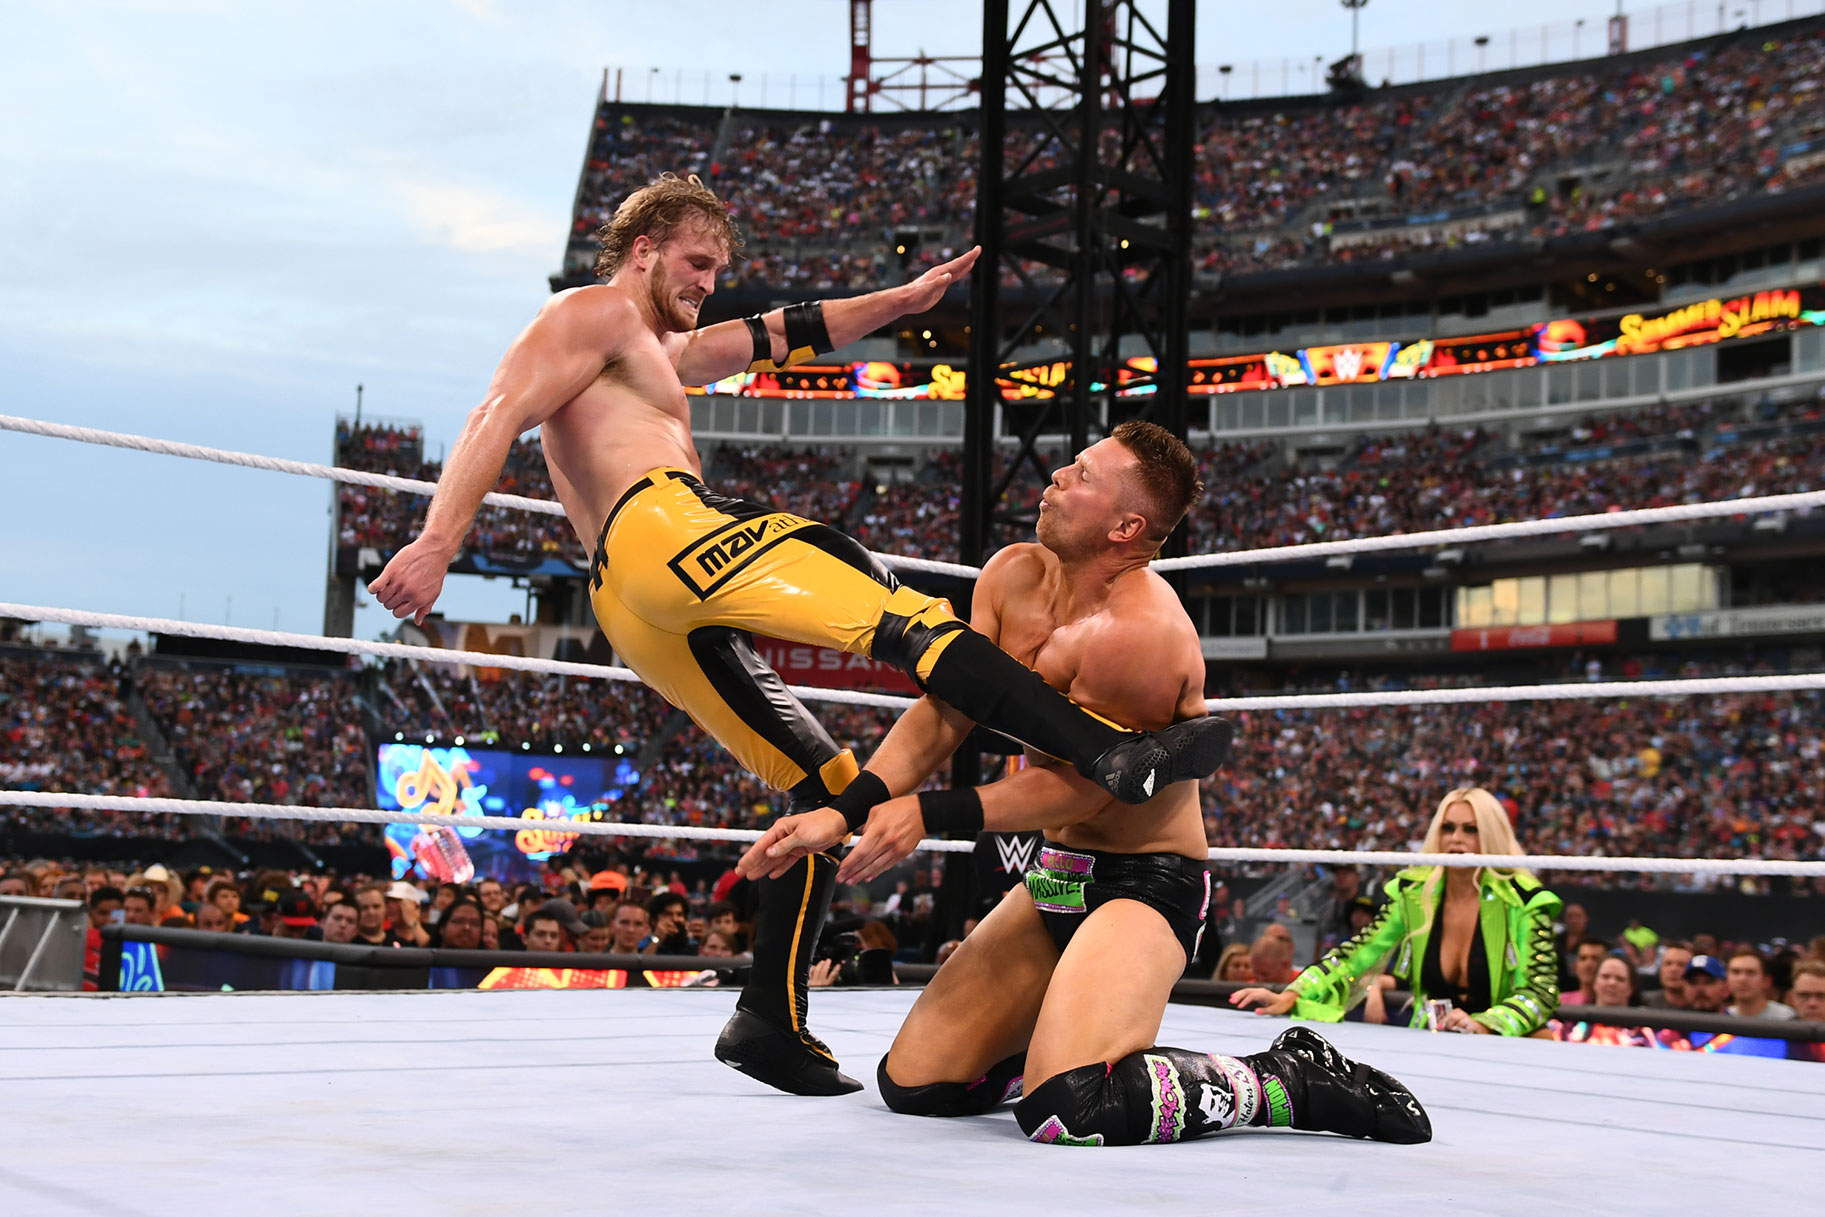 Logan Paul kicking The Miz in the ring